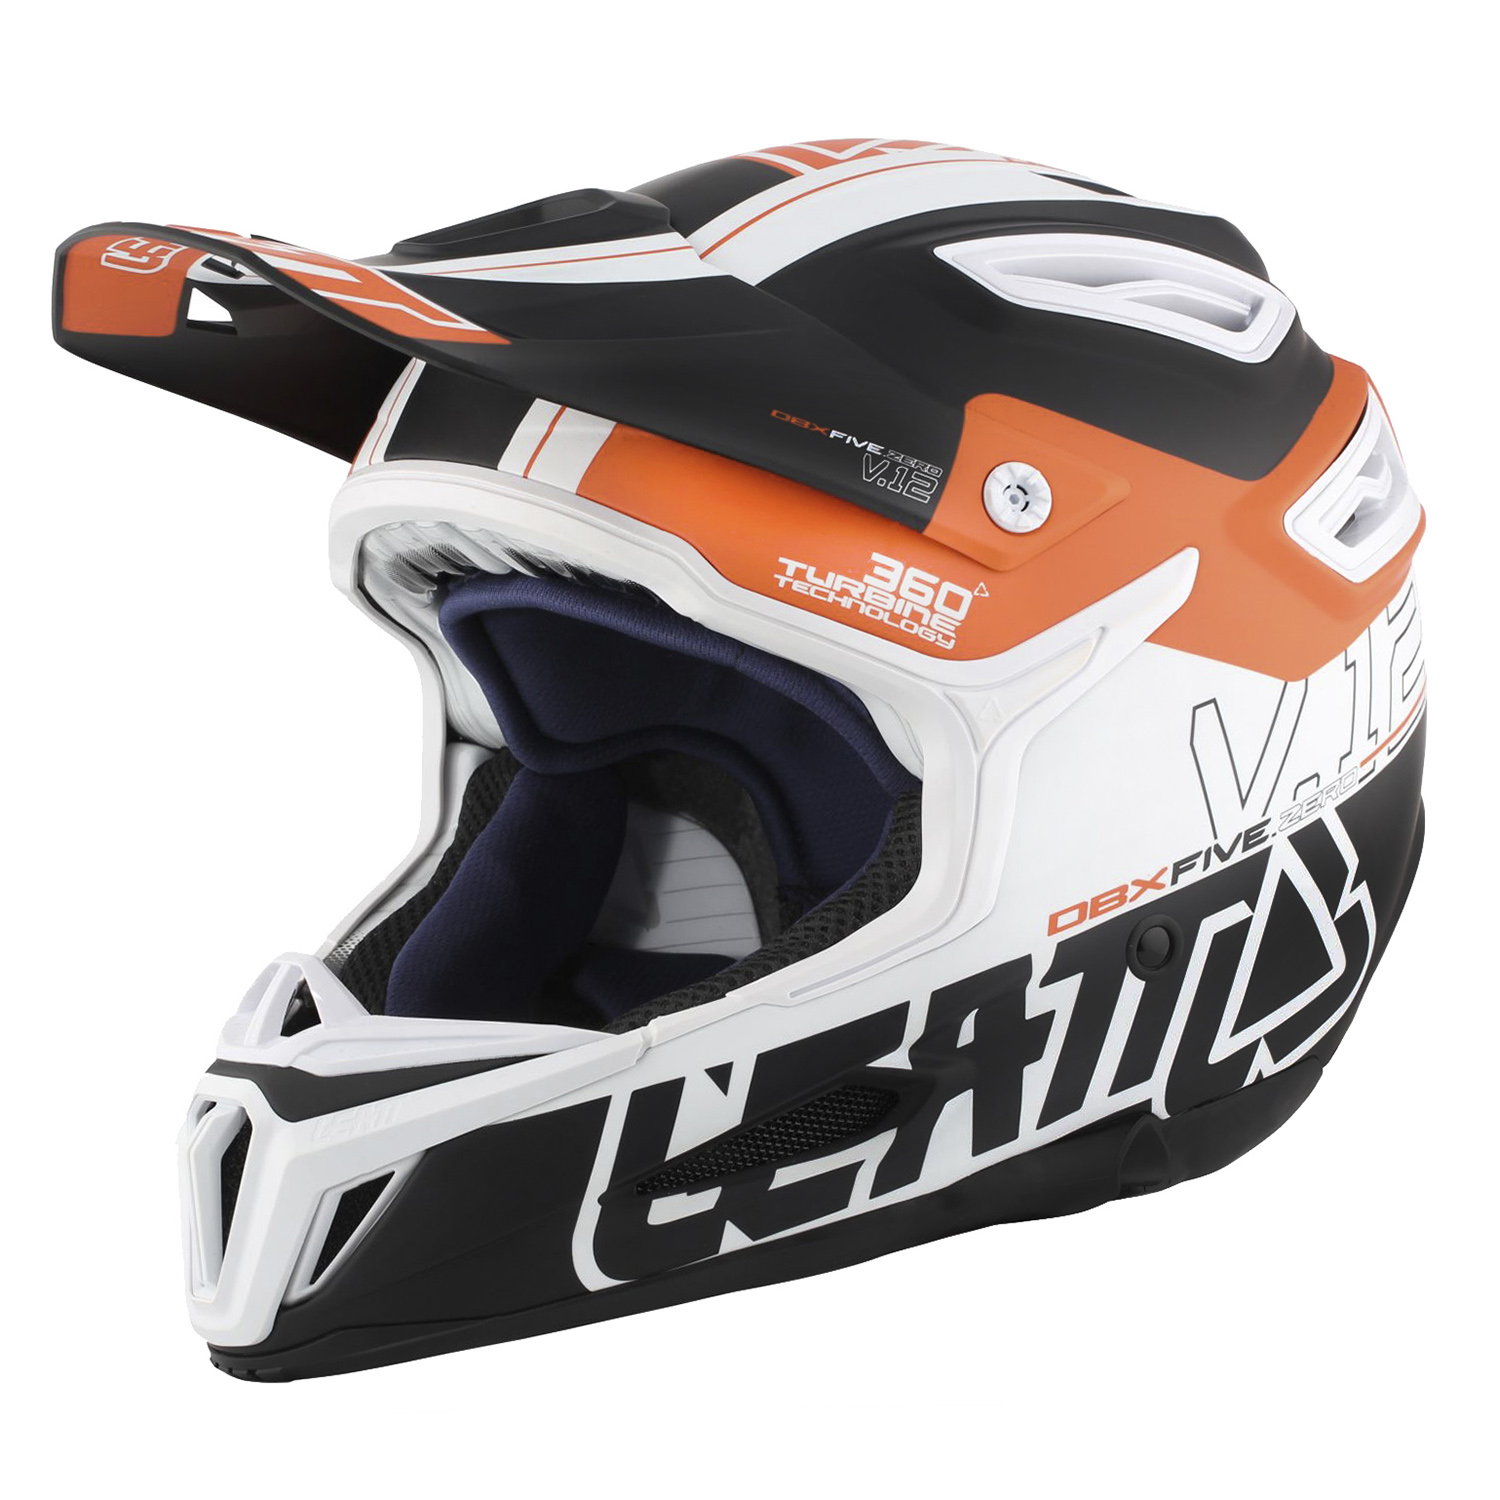 Leatt Casque VTT Downhill DBX 5.0 Composite Black/Orange/White